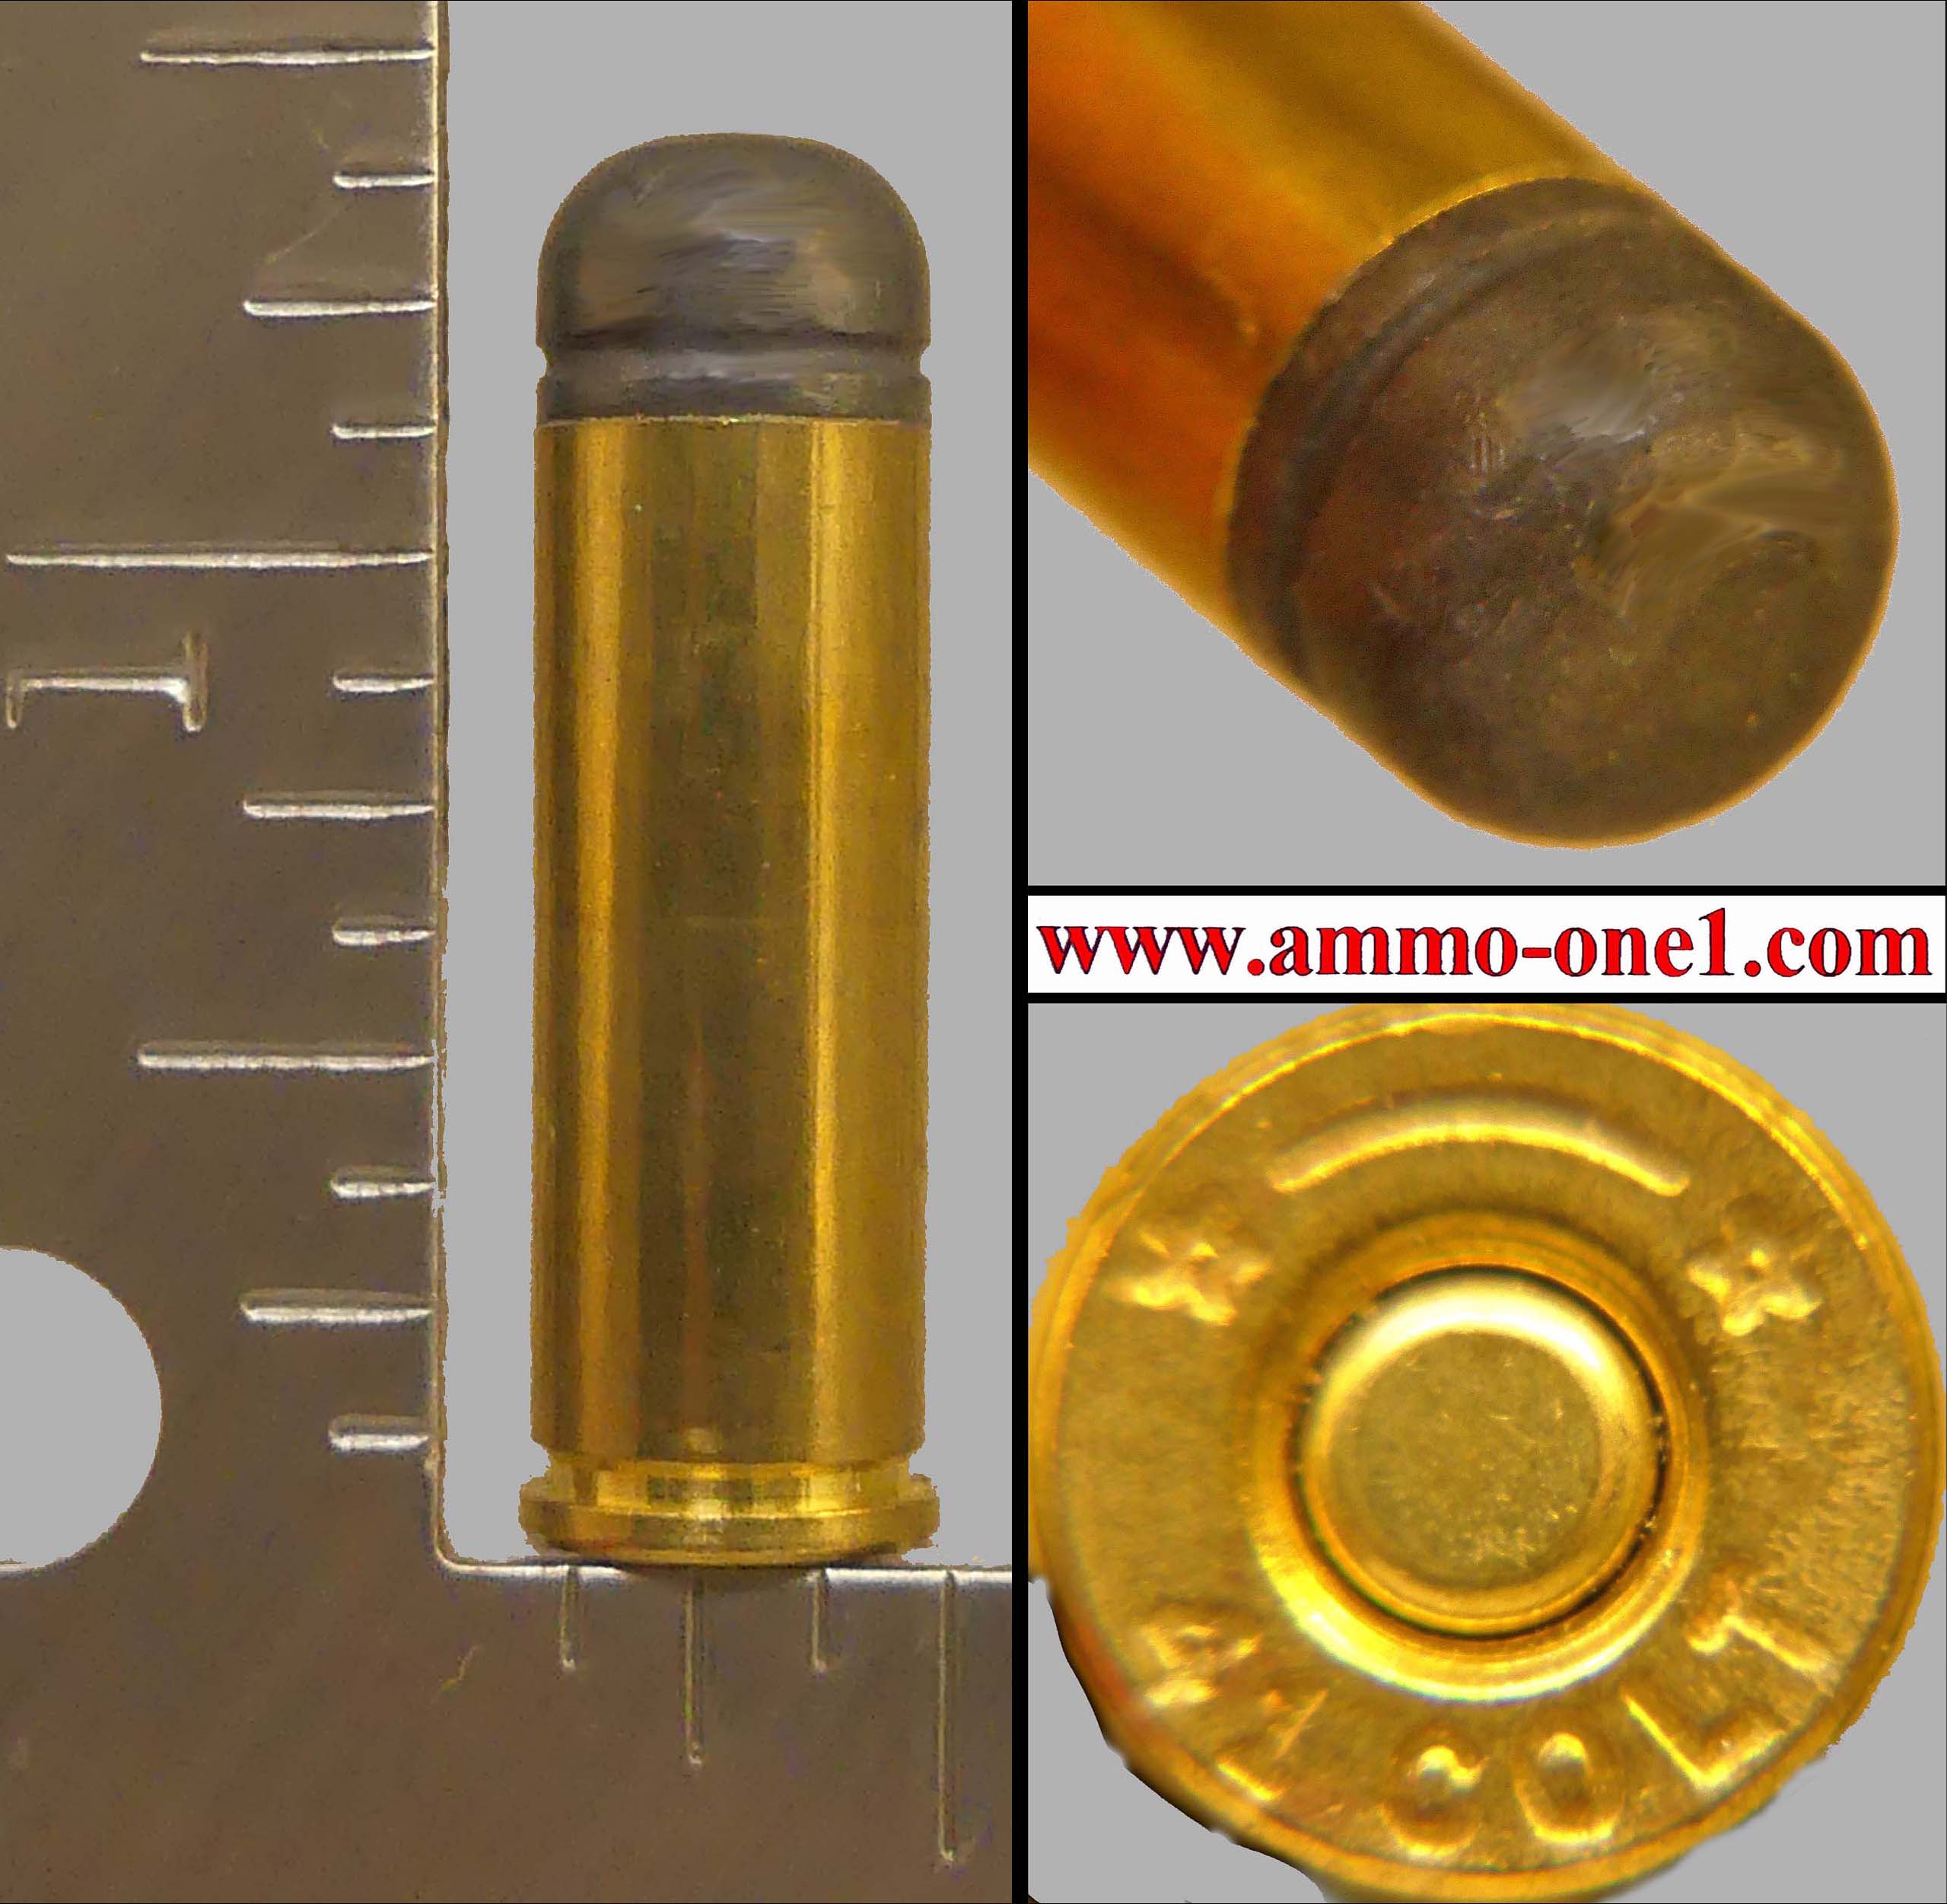 .41 Long Colt, 200 grain Lead, One Cartridge not a box! - Ammo-One1